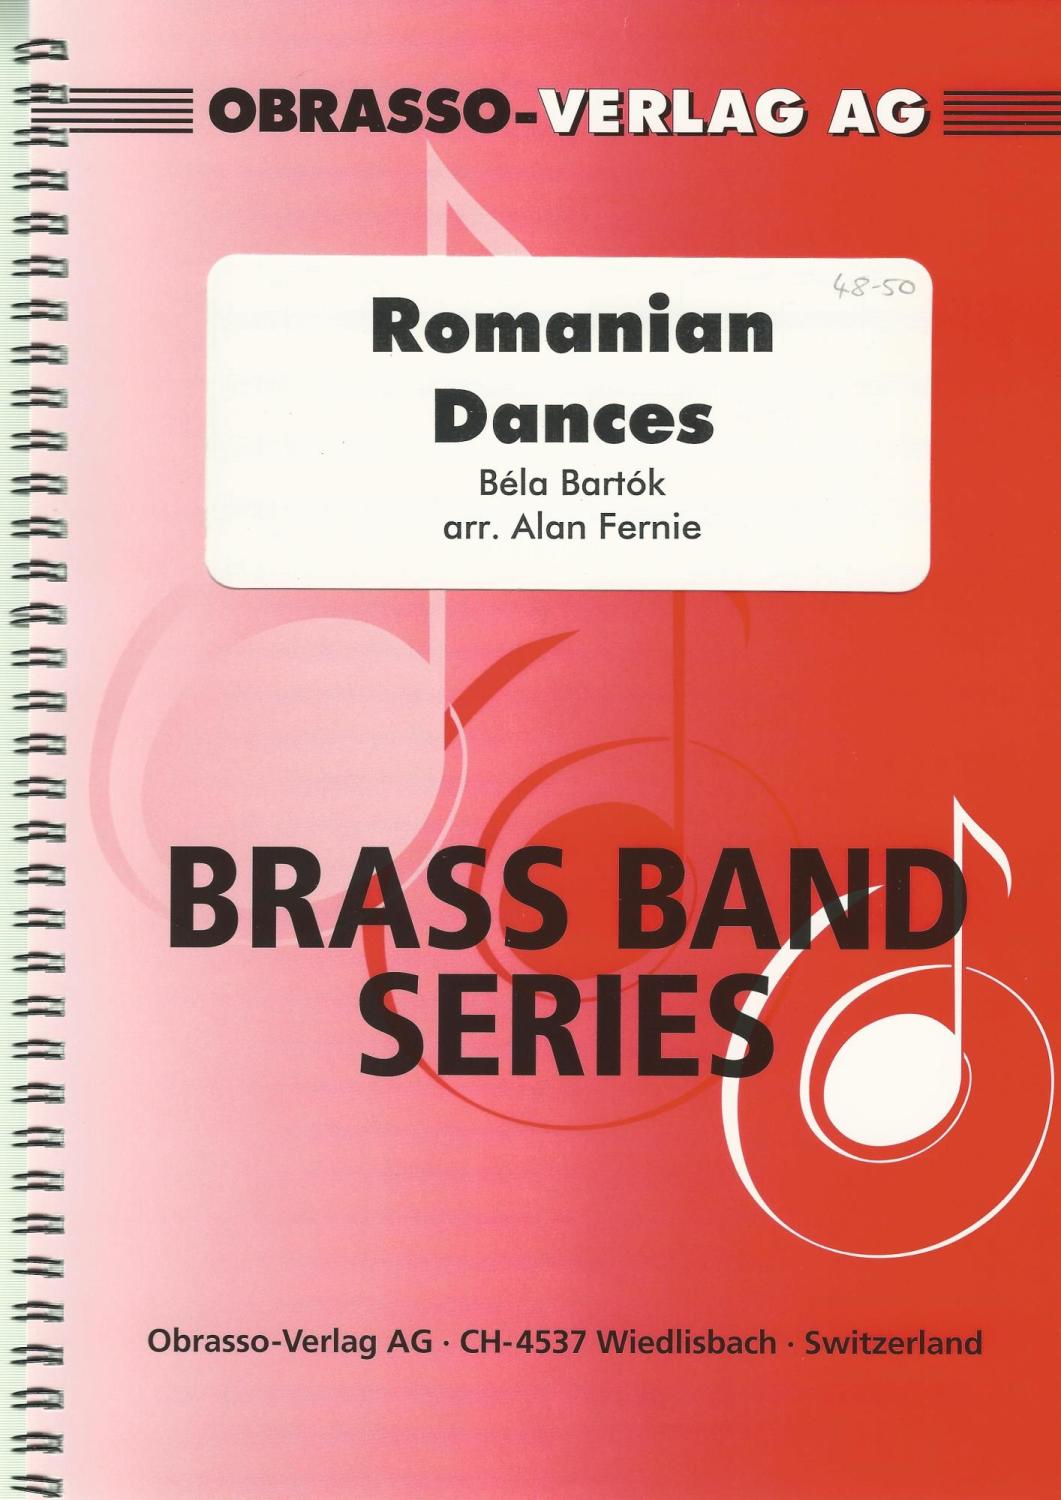 Romanian Dances for Brass Band - Bela Bartok arr. Alan Fernie